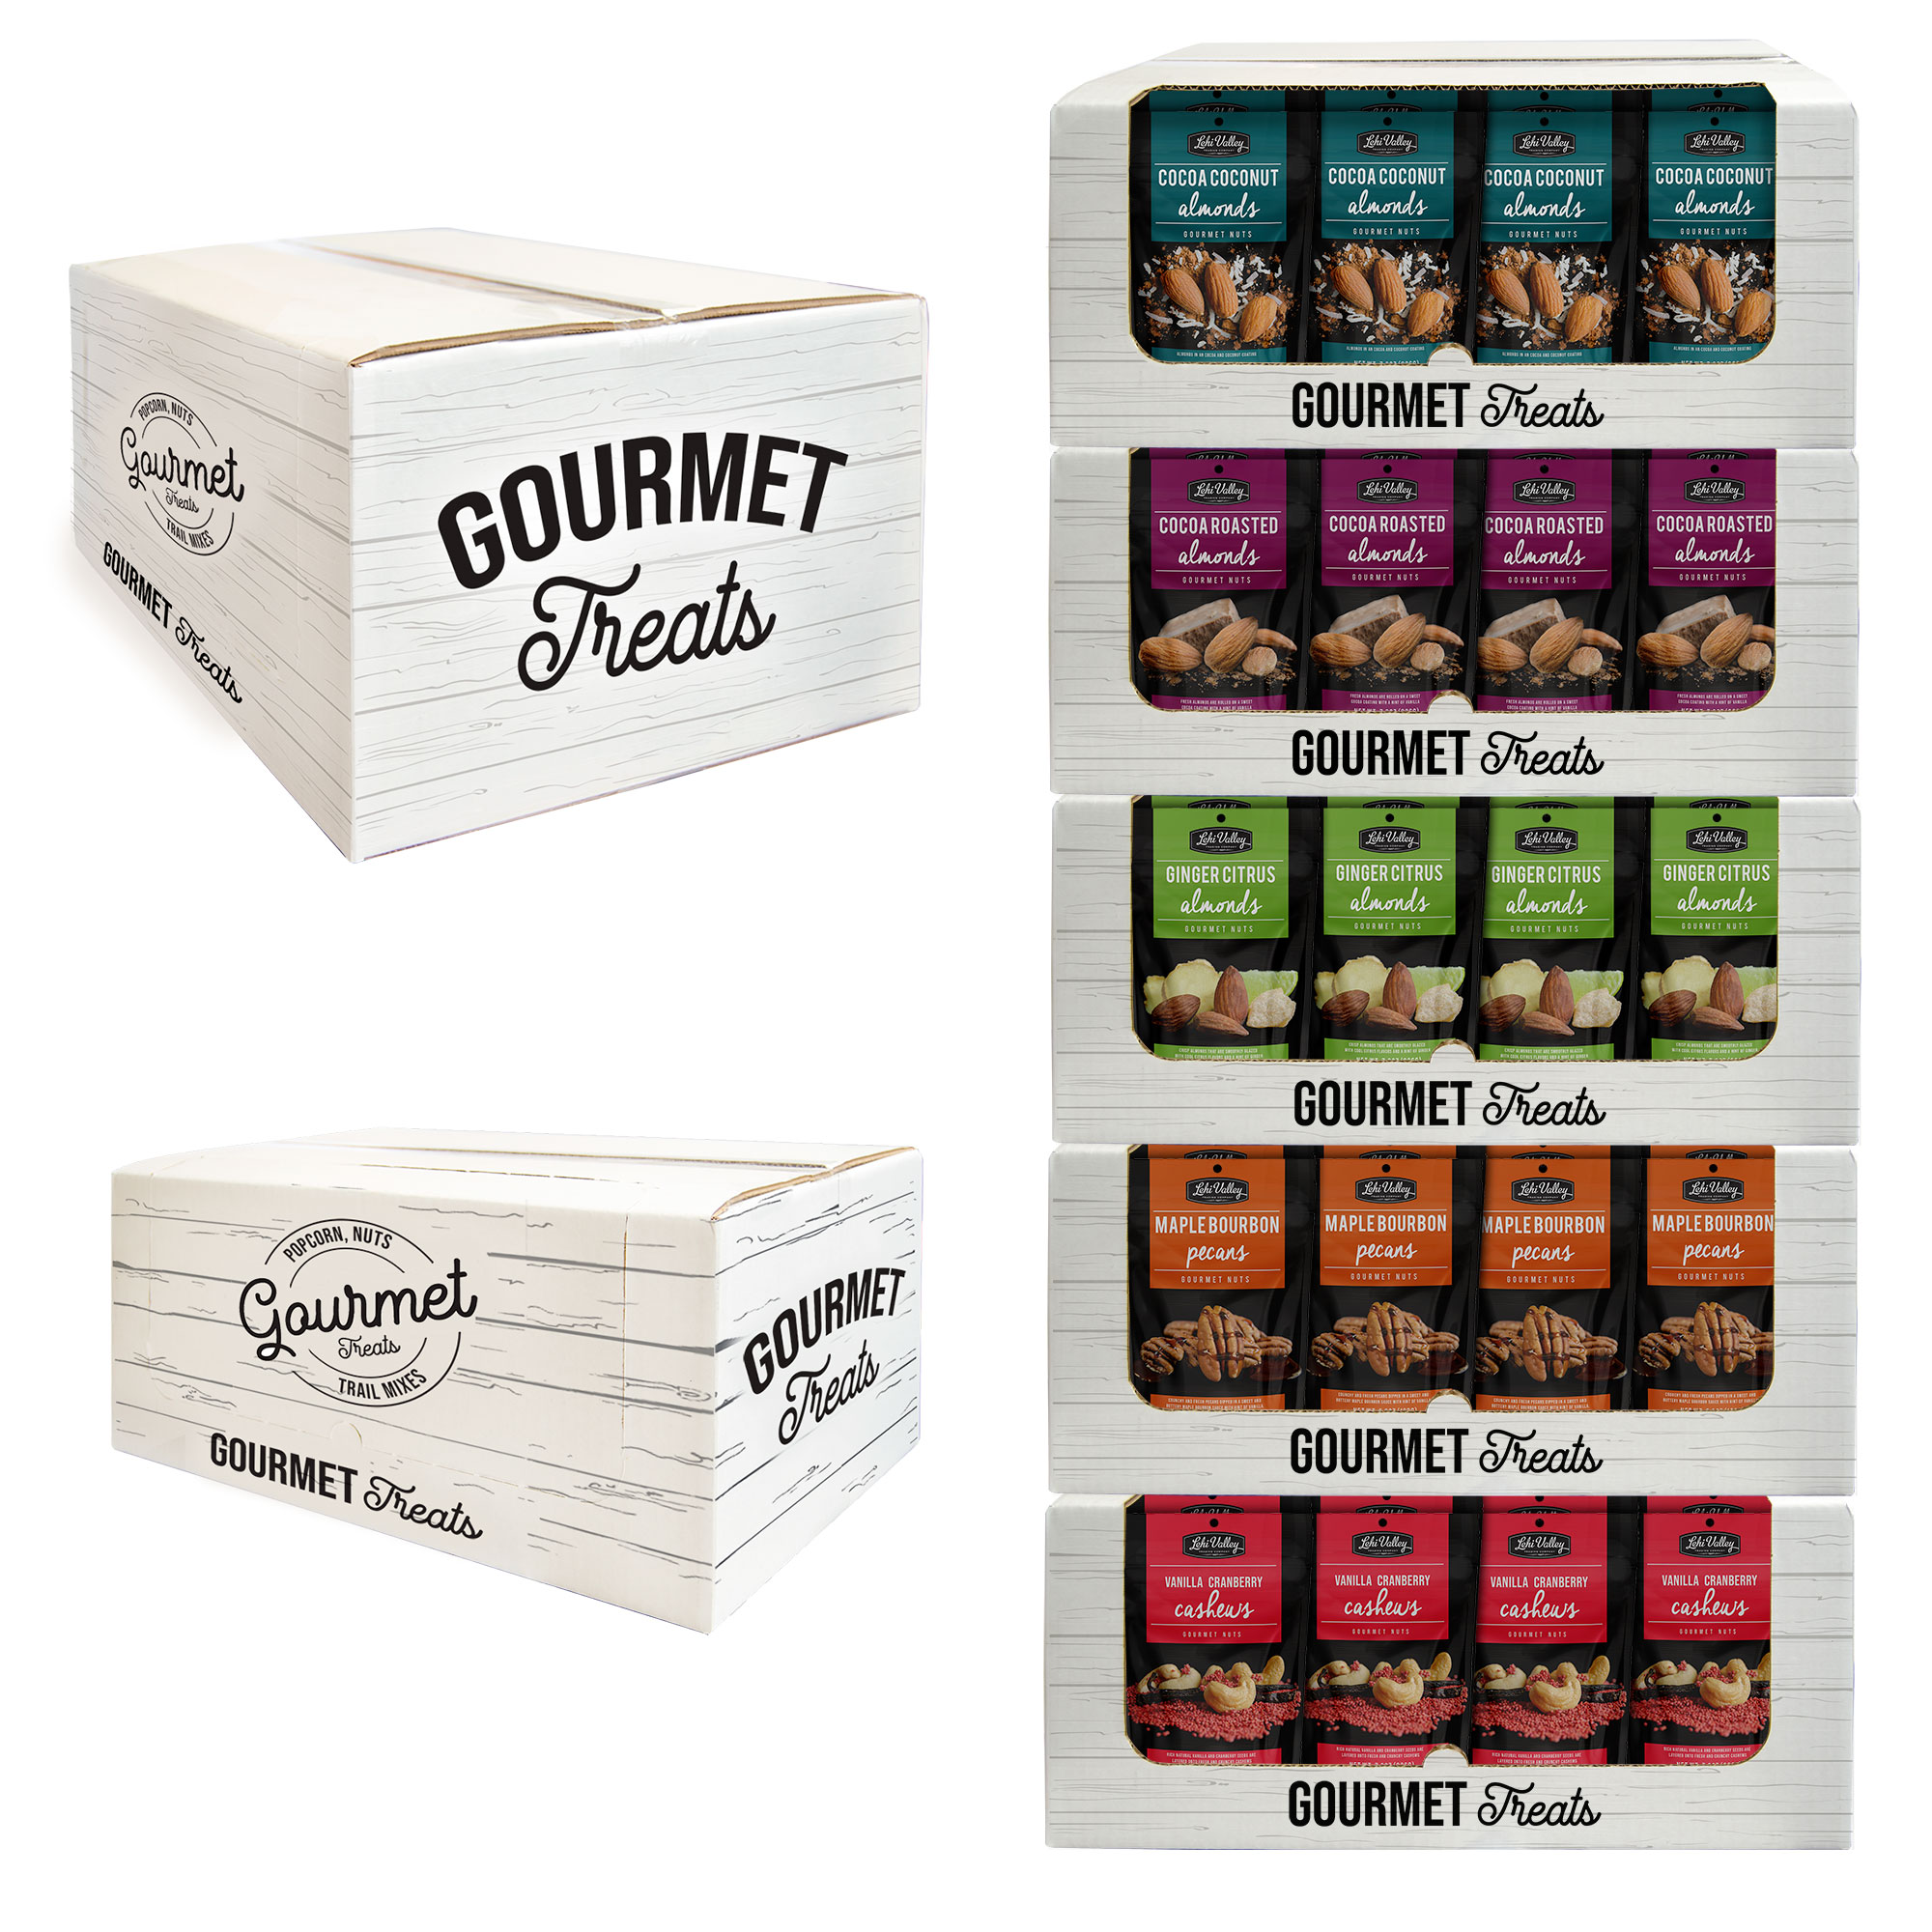 Gourmet Nuts innovative packaging holiday savory snacks